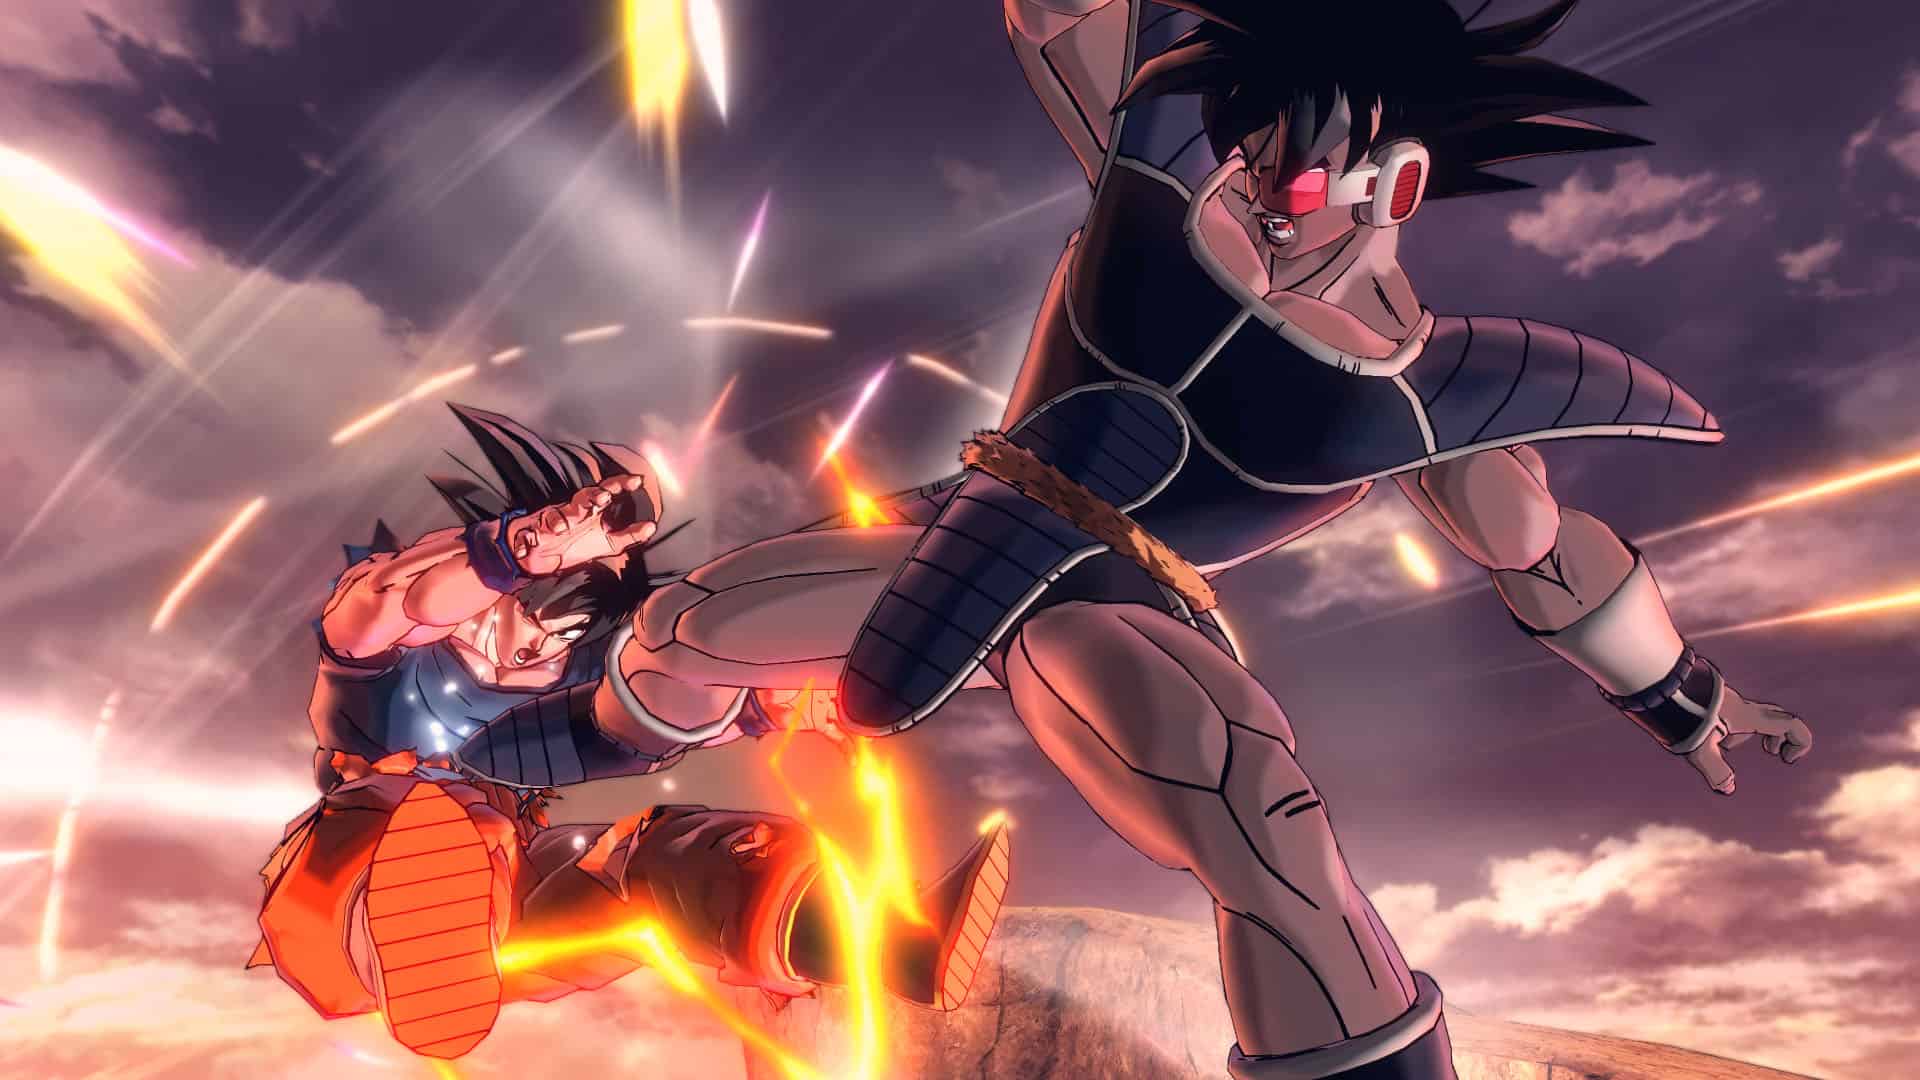 Fight between Turles and Goku